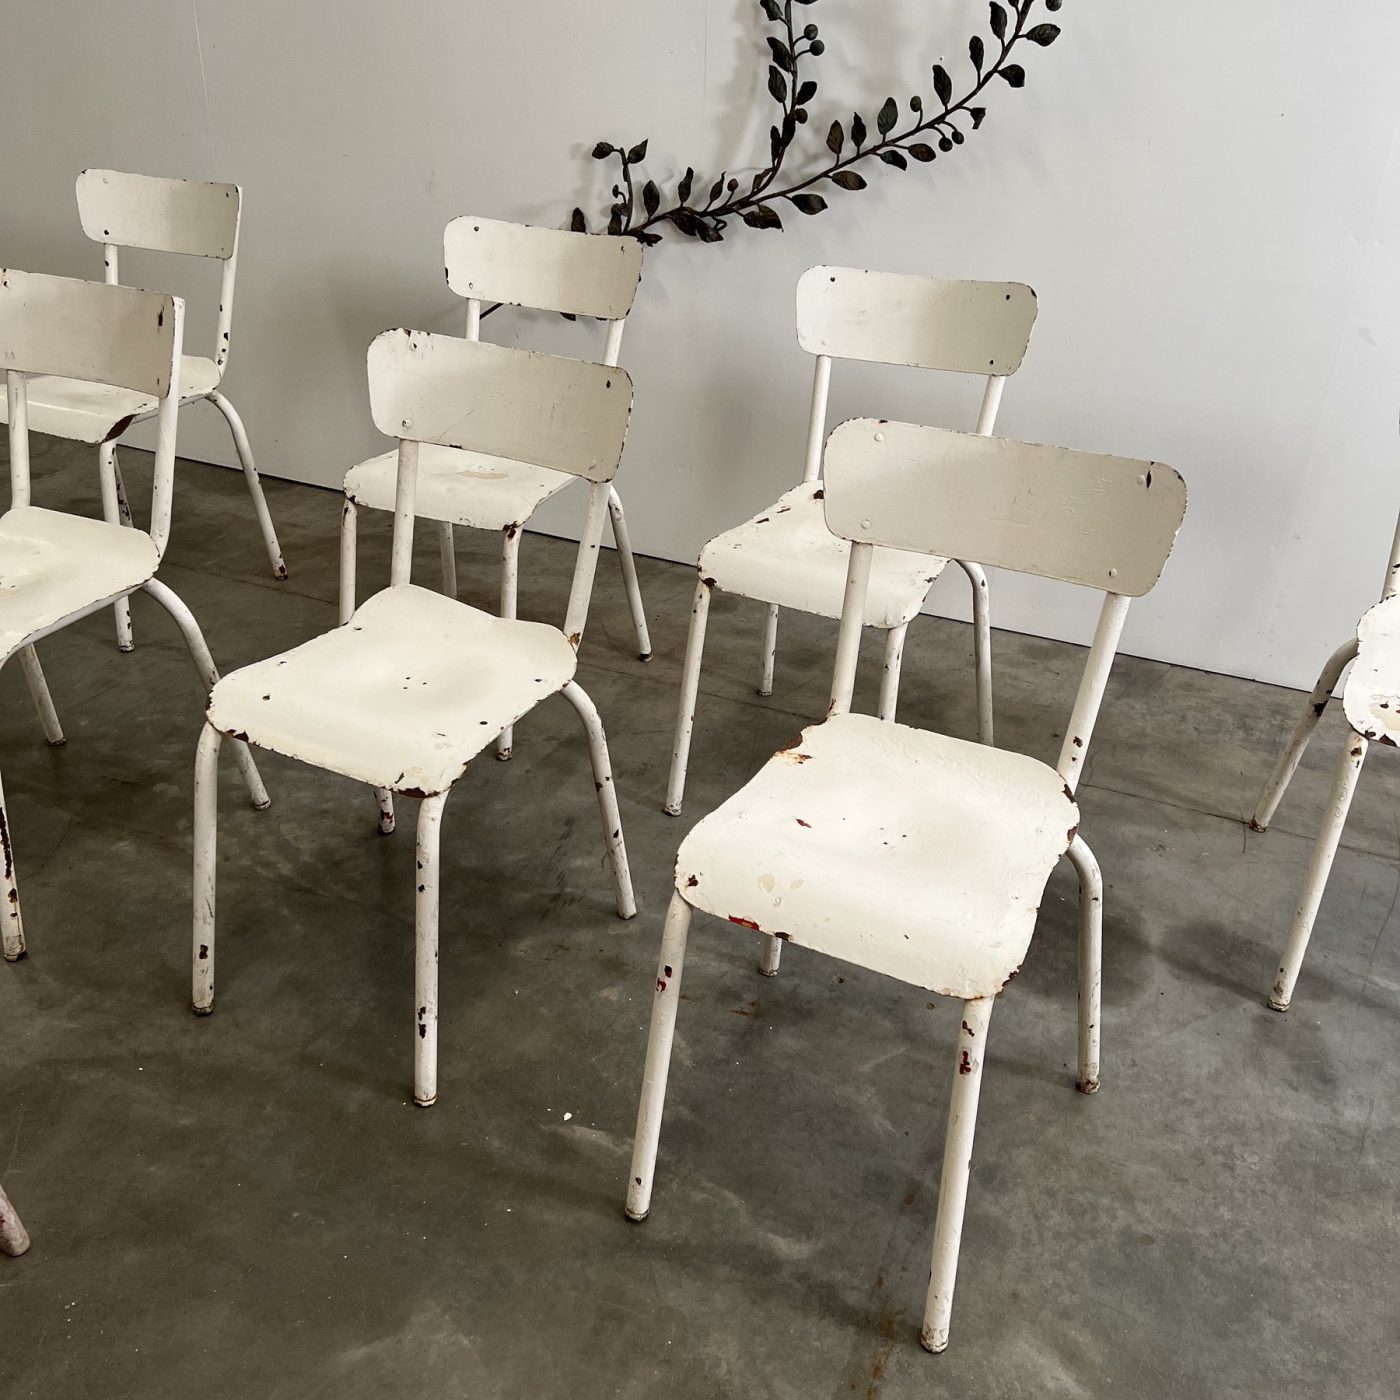 objet-vagabond-metal-chairs0008